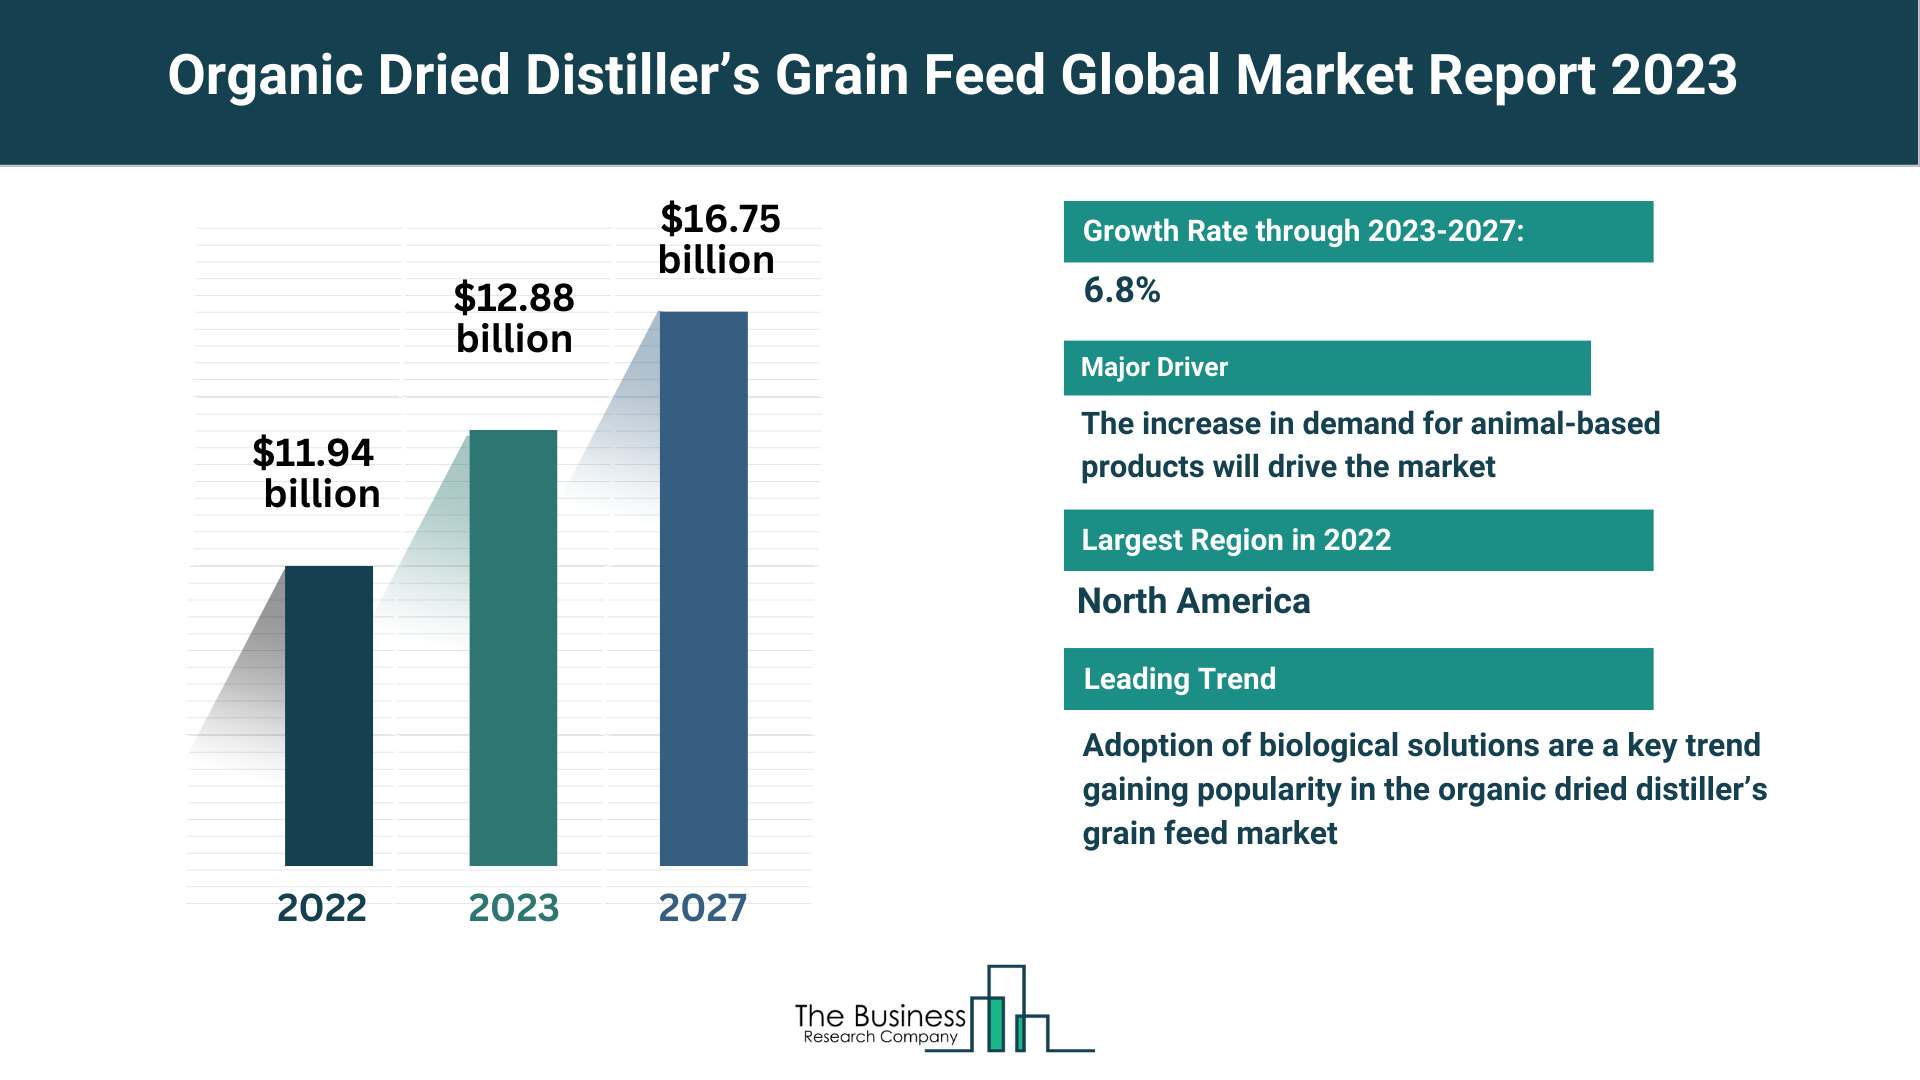 Global Organic Dried Distiller’s Grain Feed Market